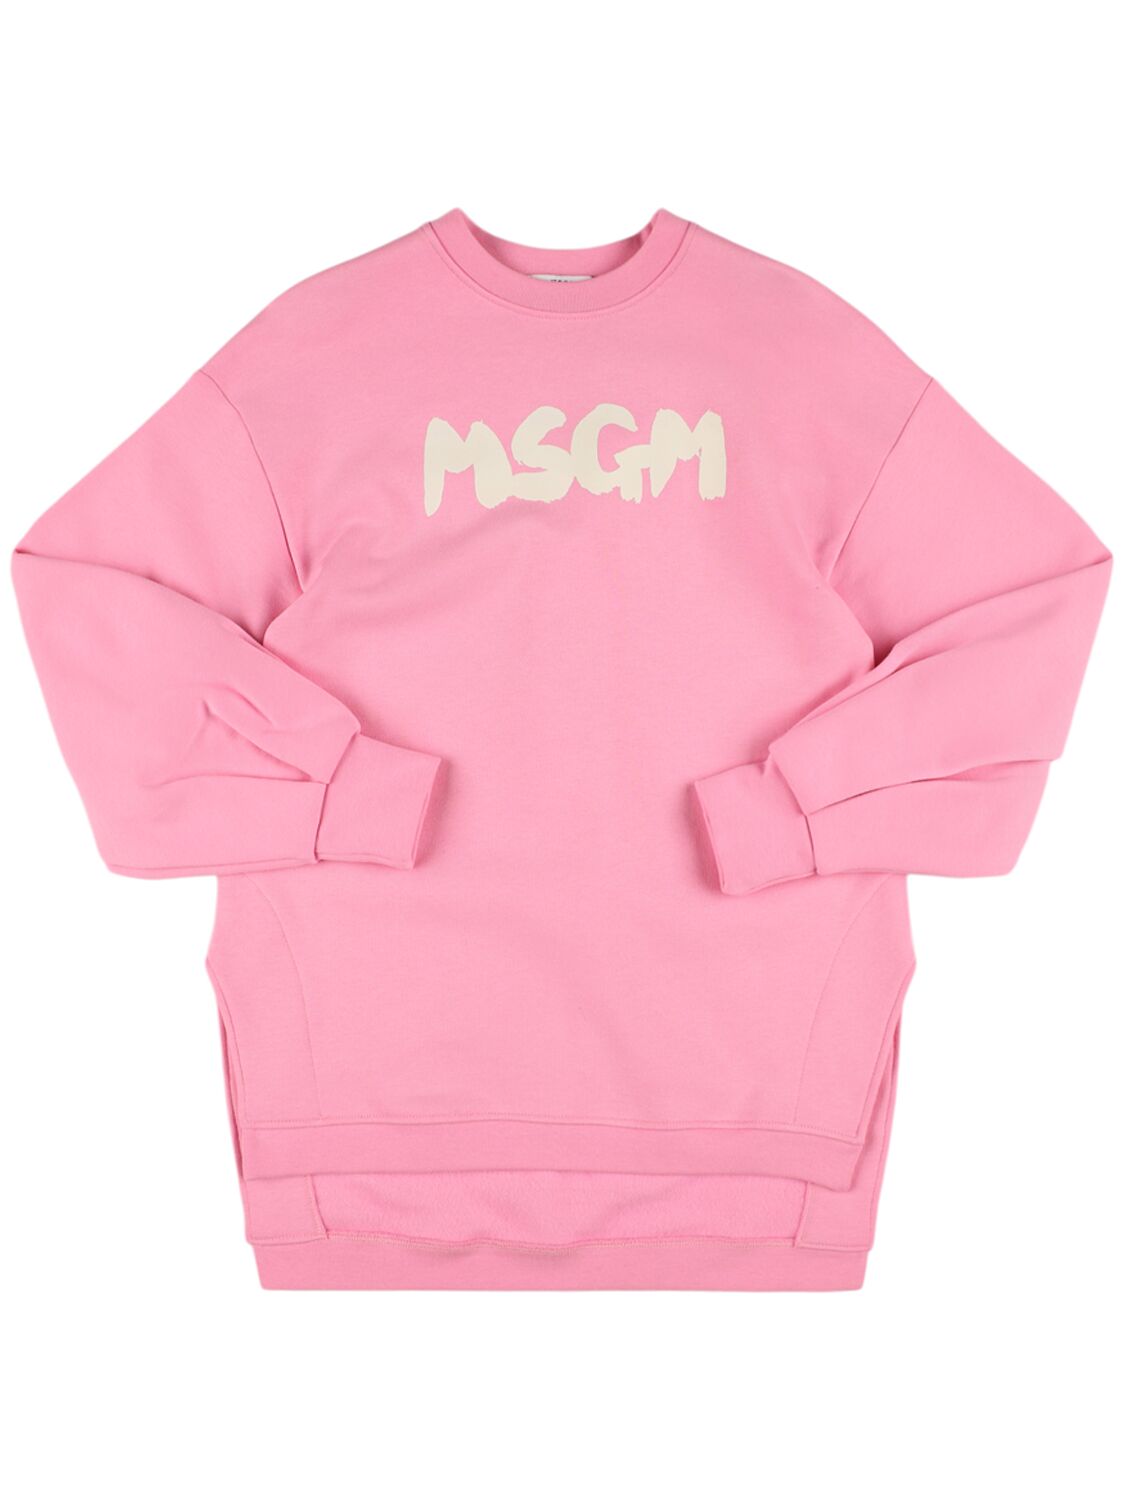 Msgm Cotton Sweatshirt Dress In Pink